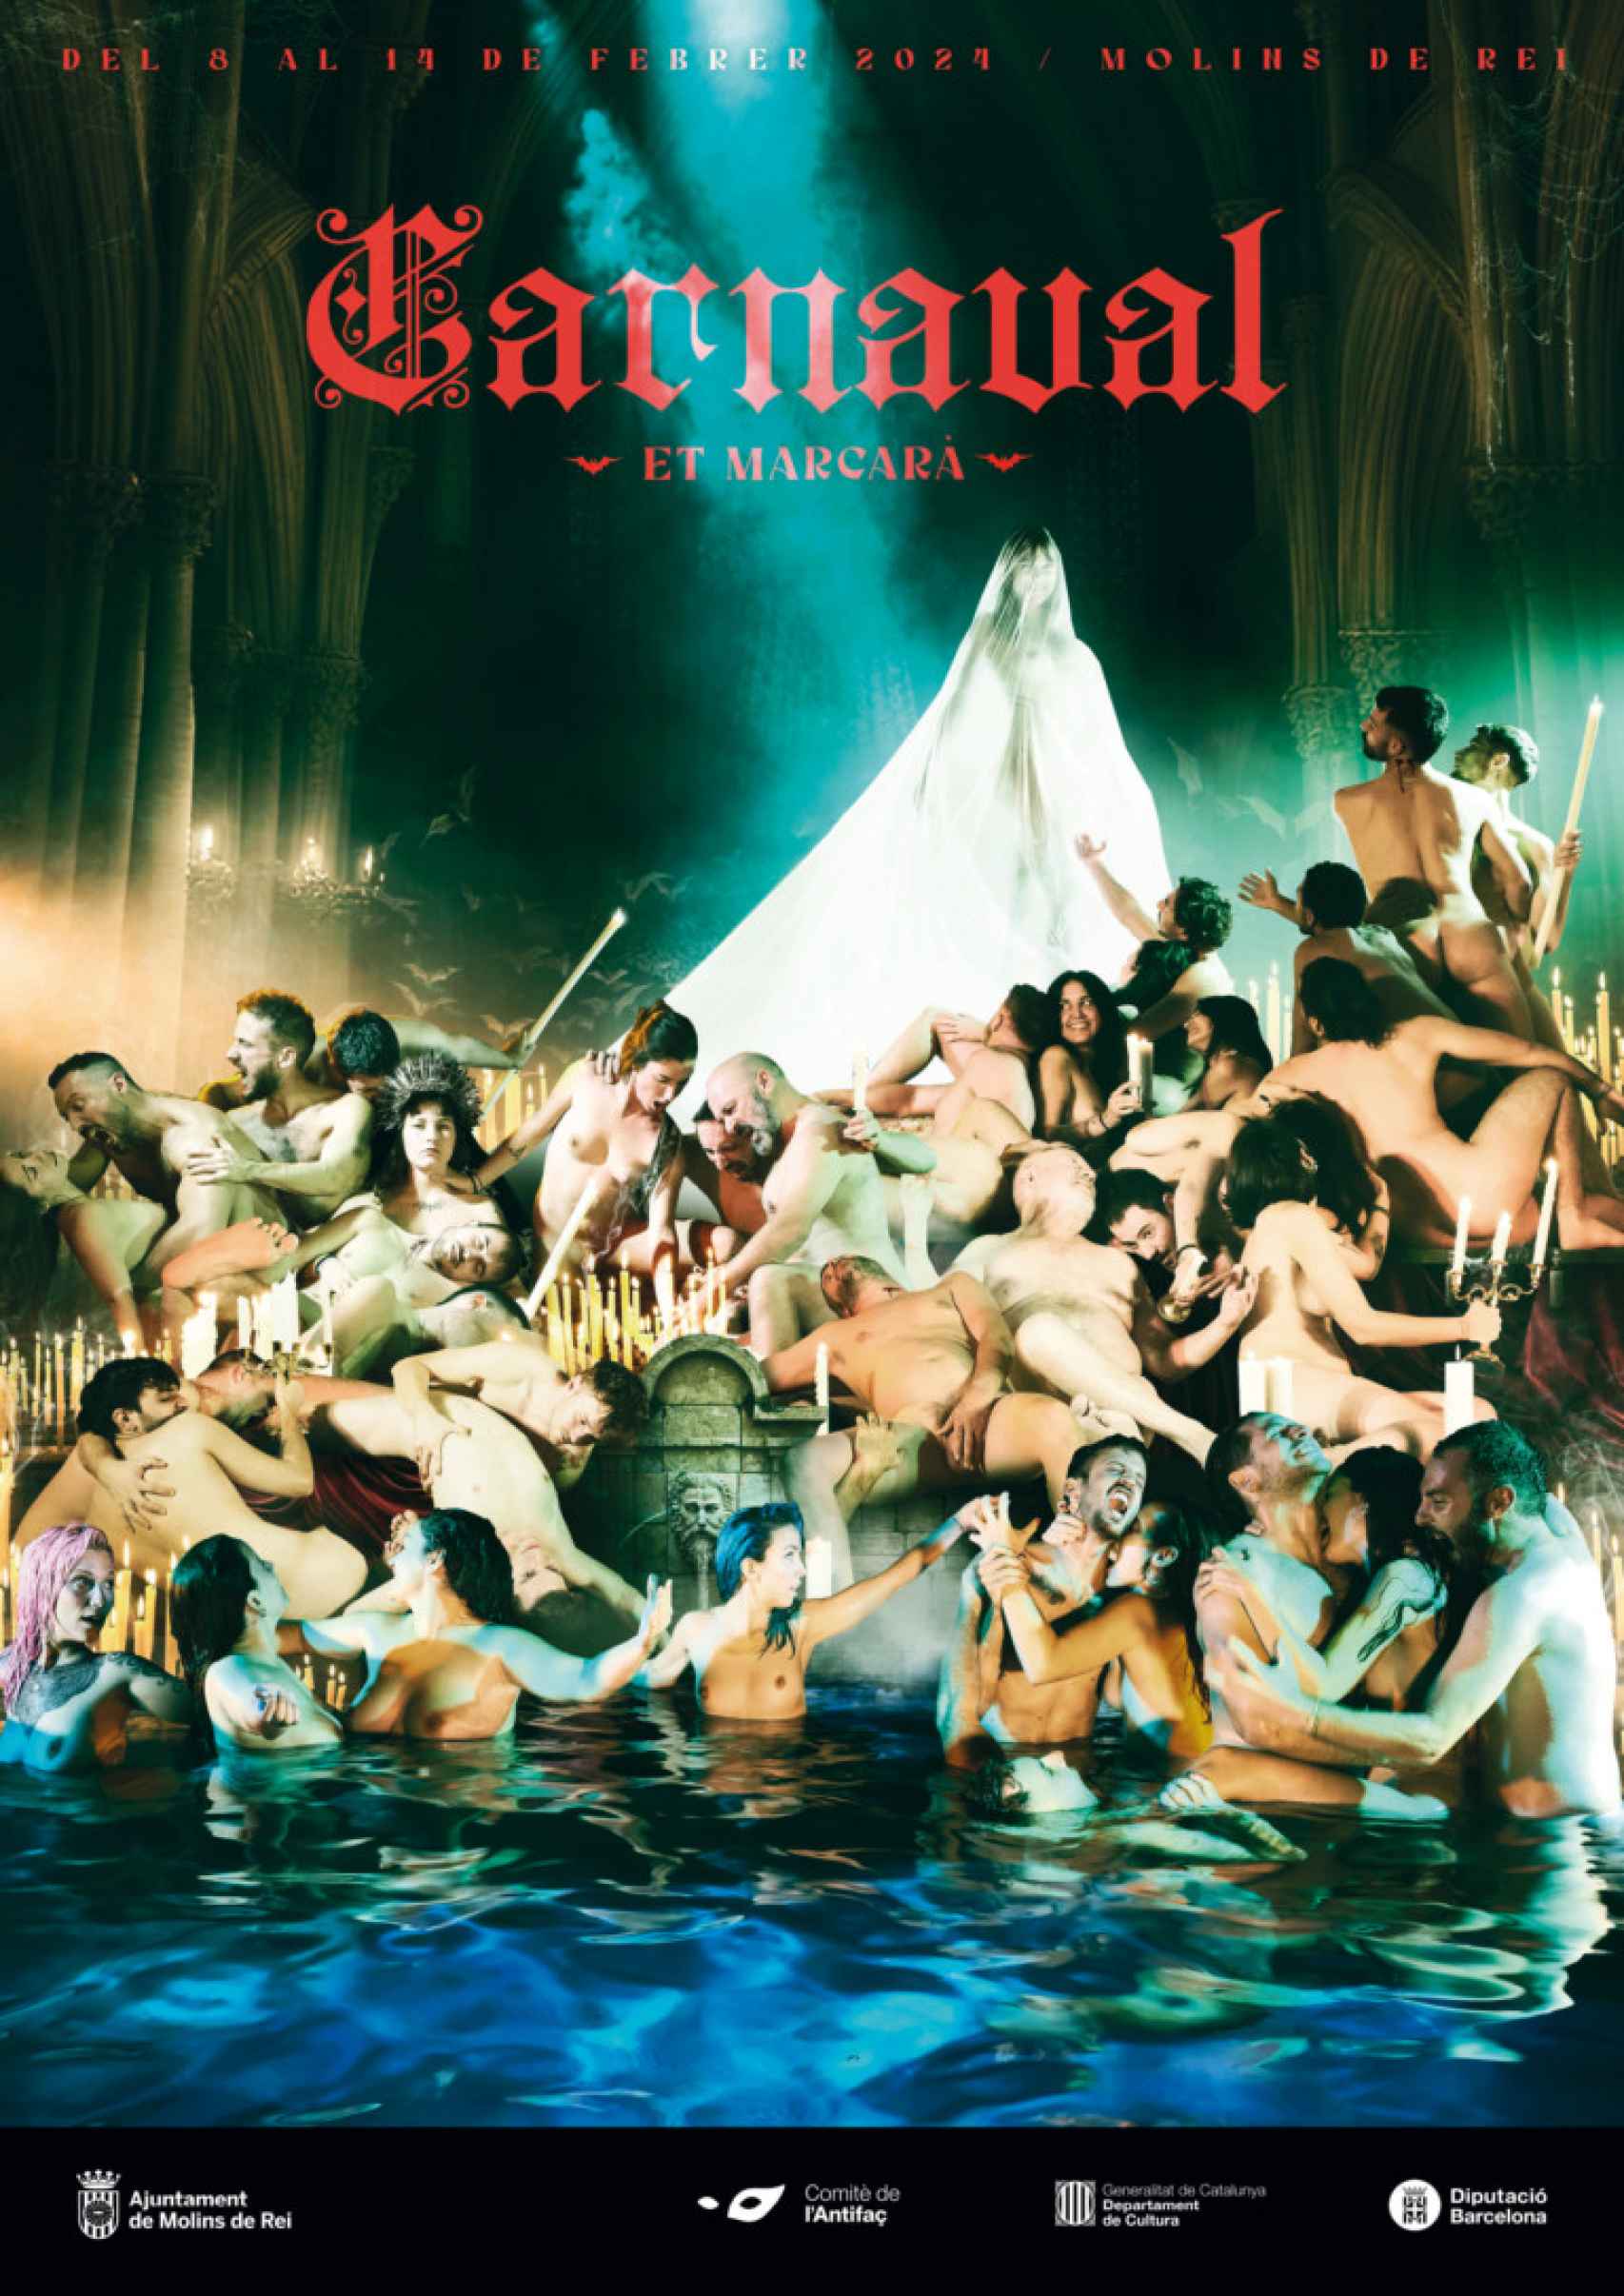 Cartel promocional del Carnaval de 2024 de Molins de Rei